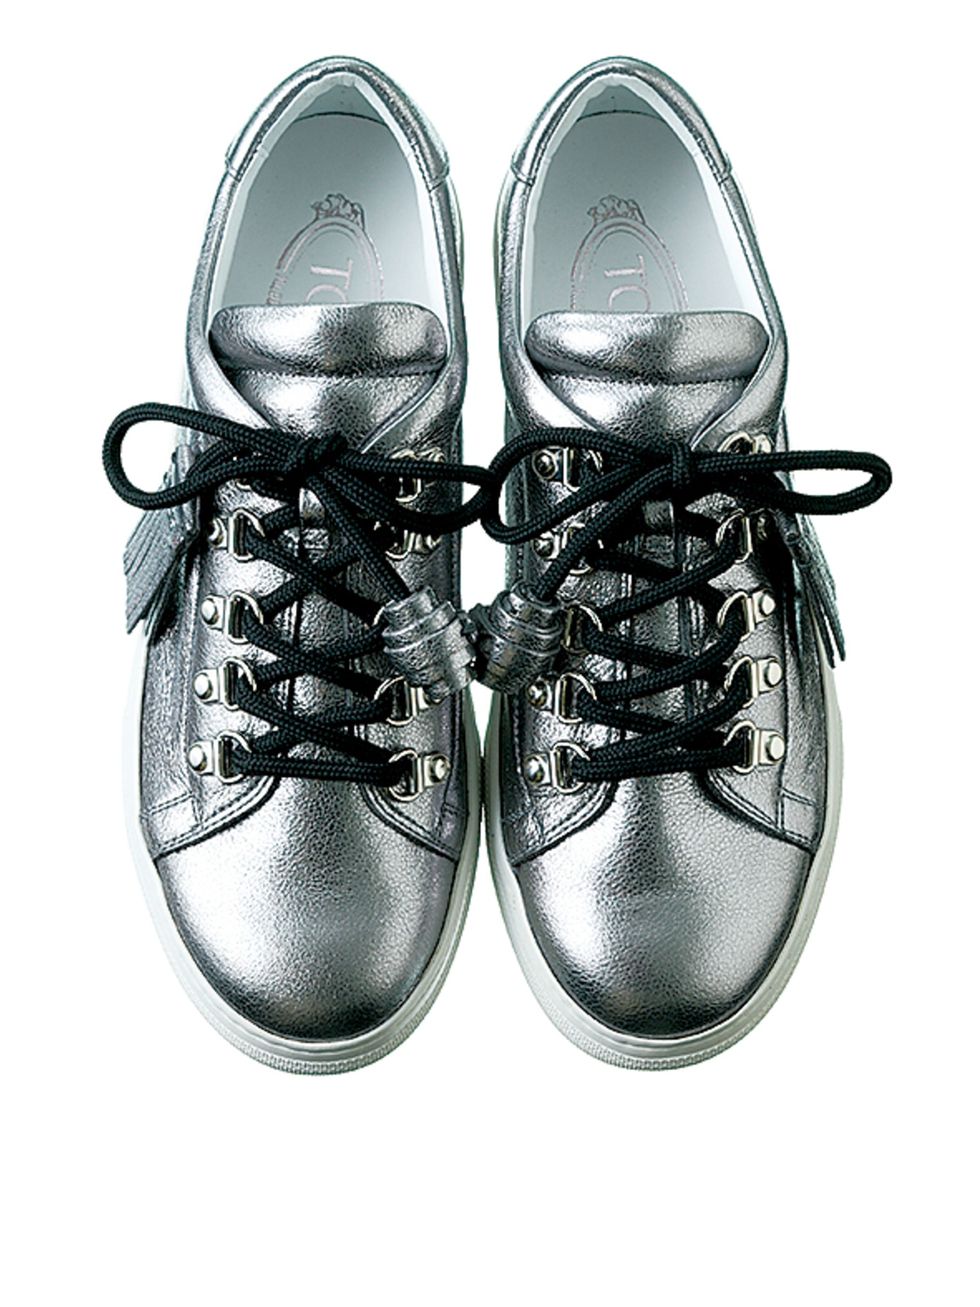 Footwear, Shoe, Product, White, Style, Light, Fashion, Black, Grey, Tan, 